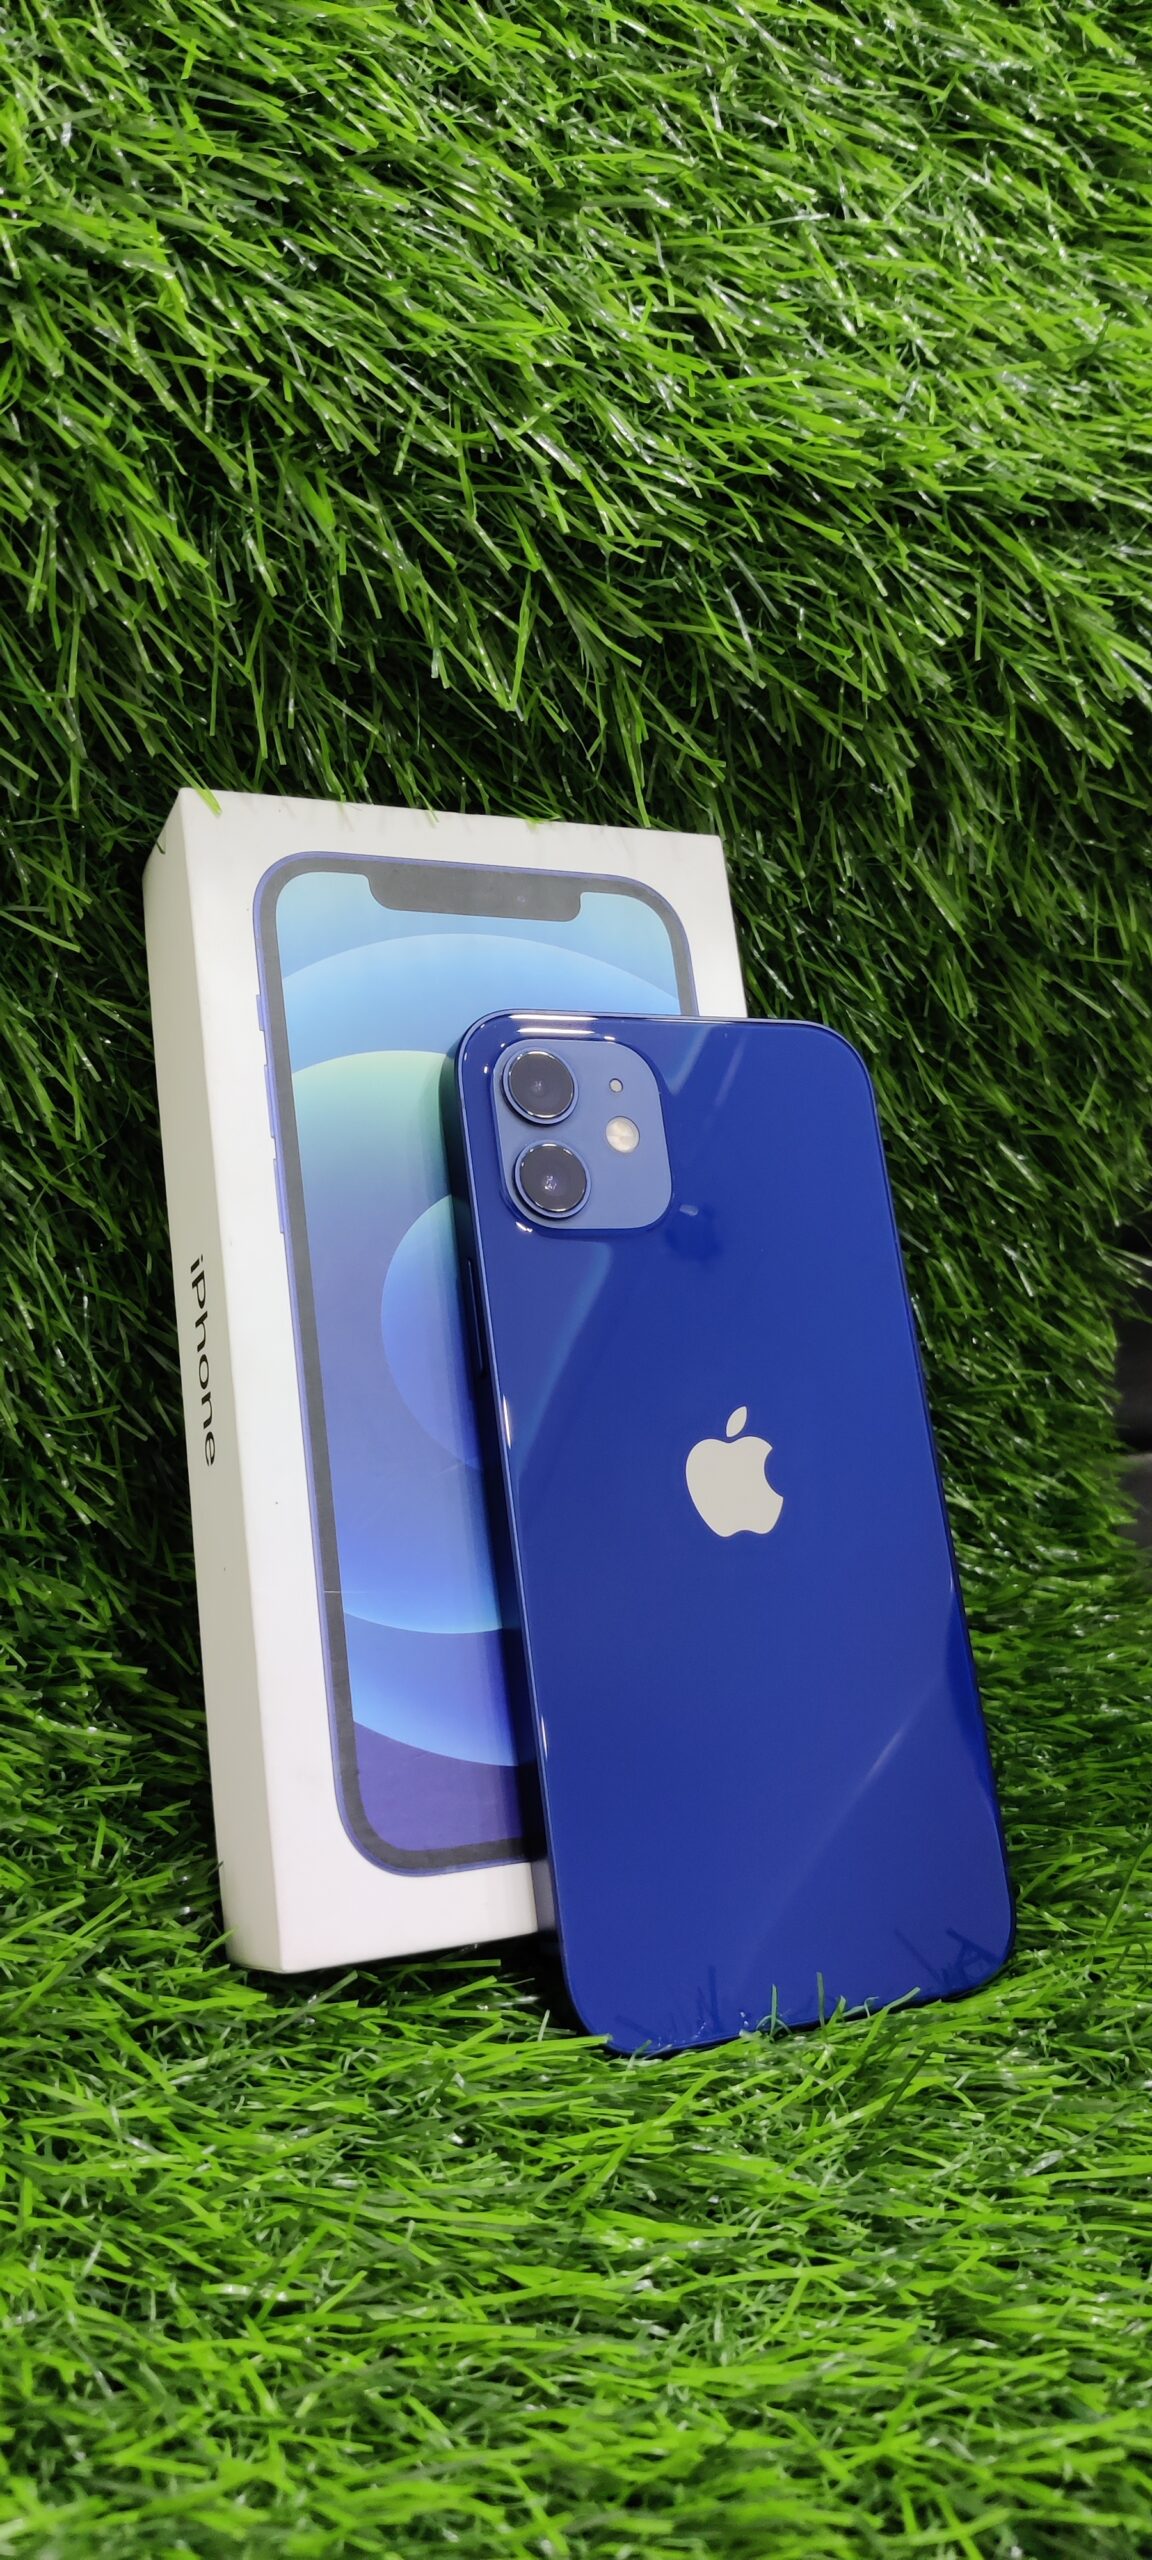 Apple iPhone 12 (Blue, 64 GB)